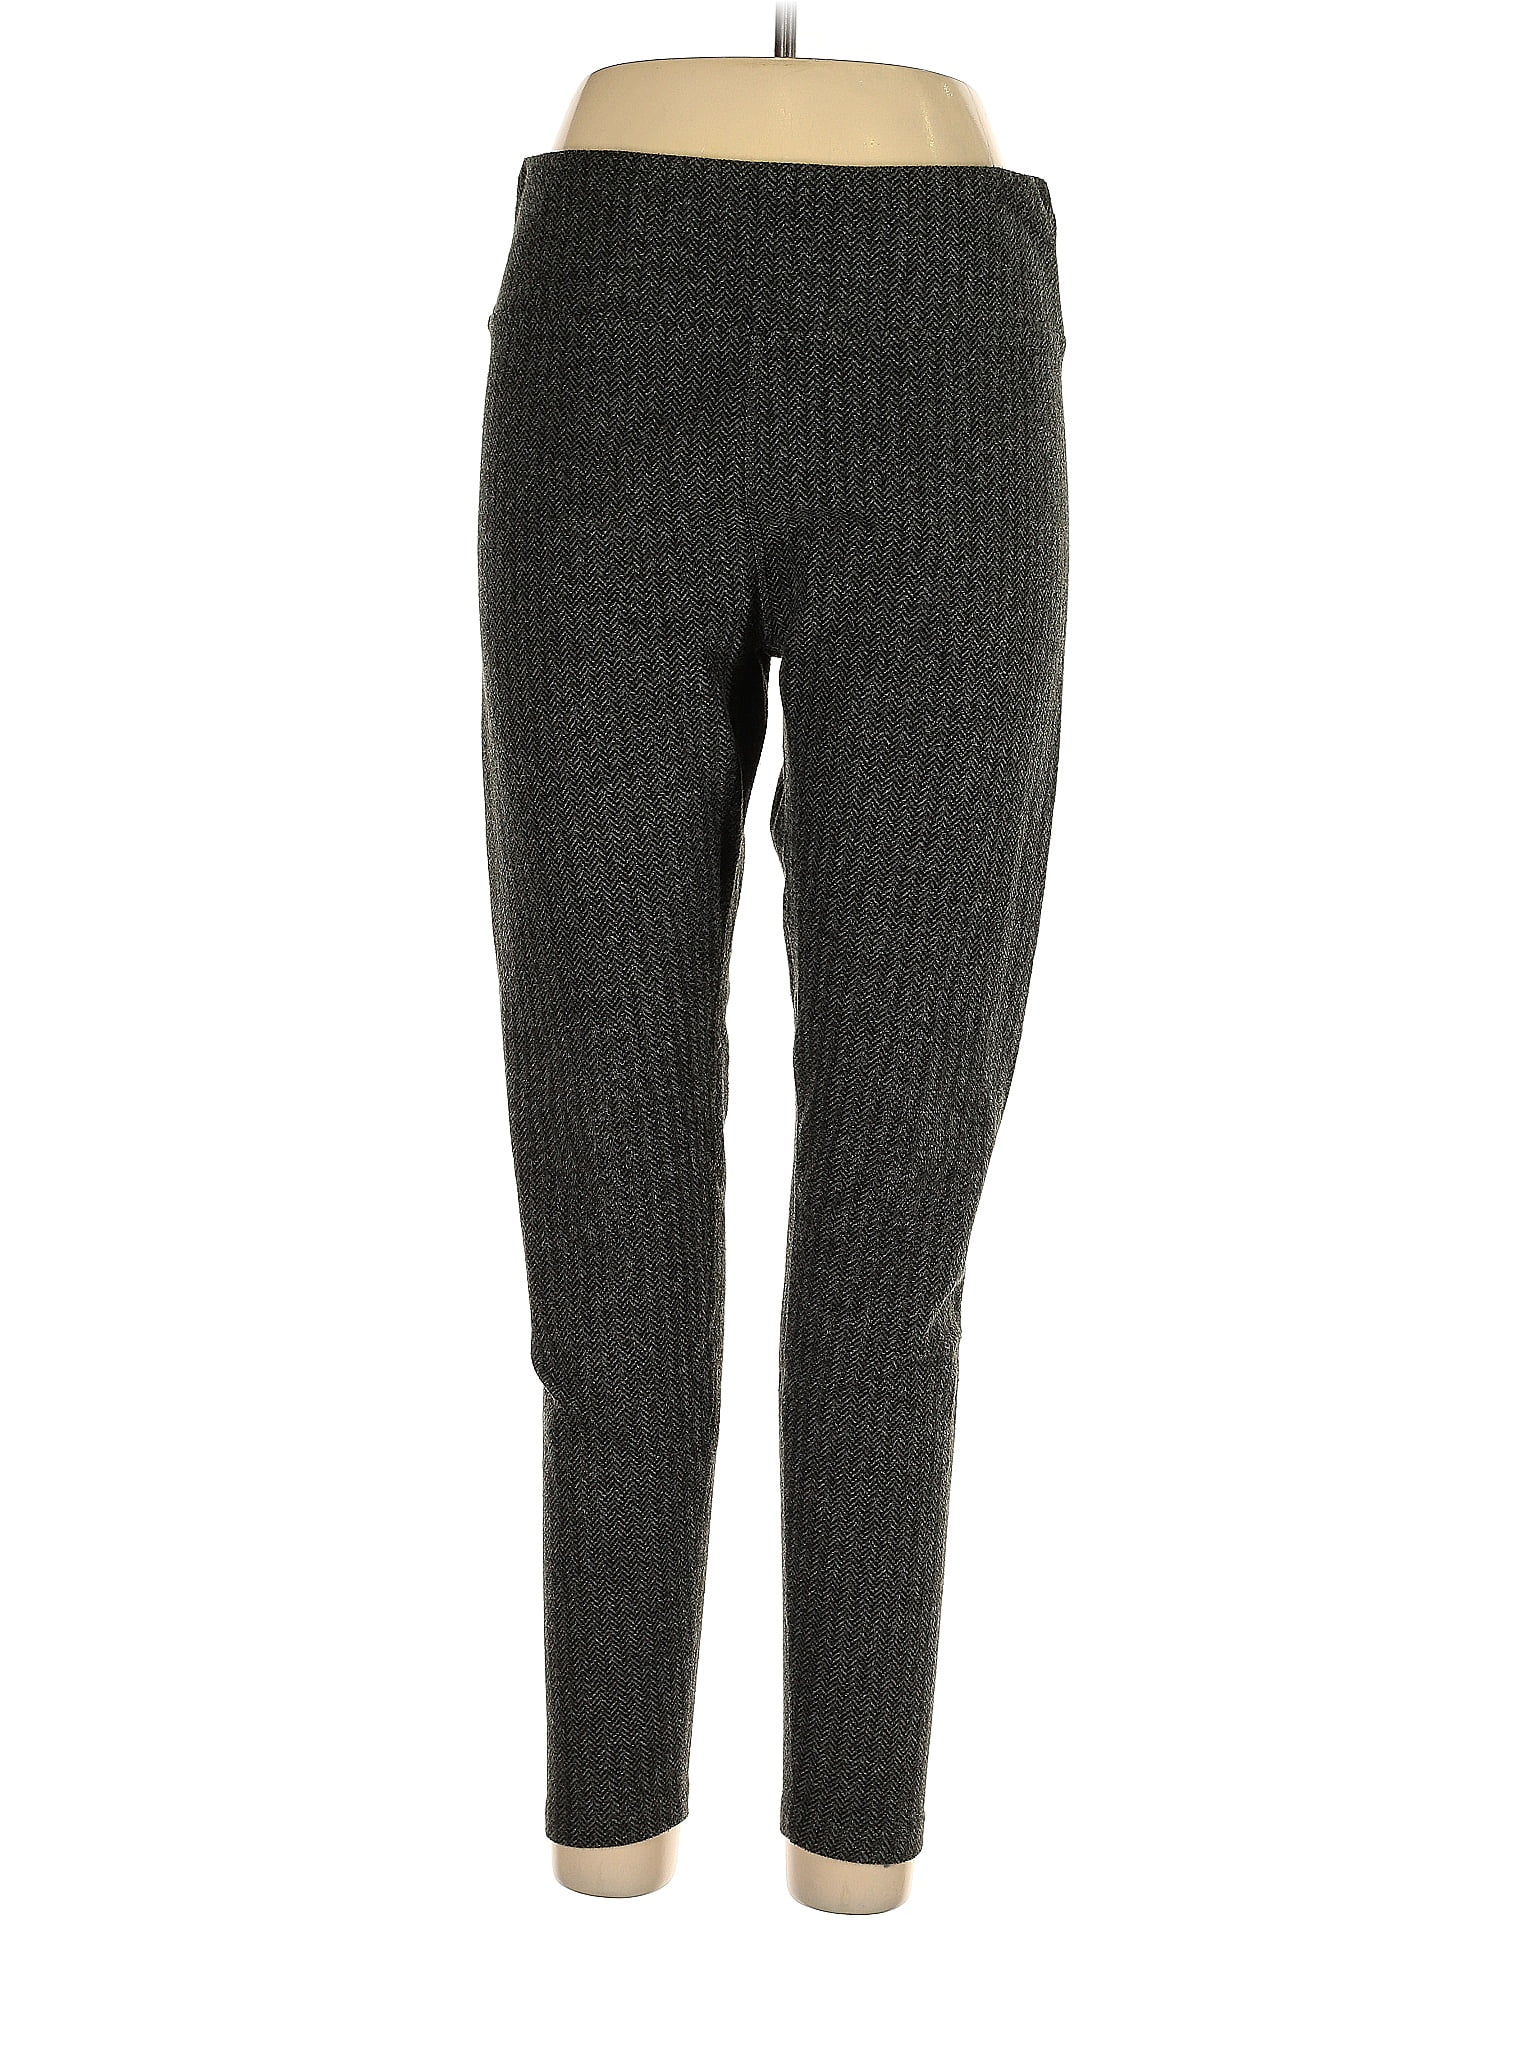 Lou & Grey Leopard Print Black Gray Dress Pants Size L - 69% off | thredUP